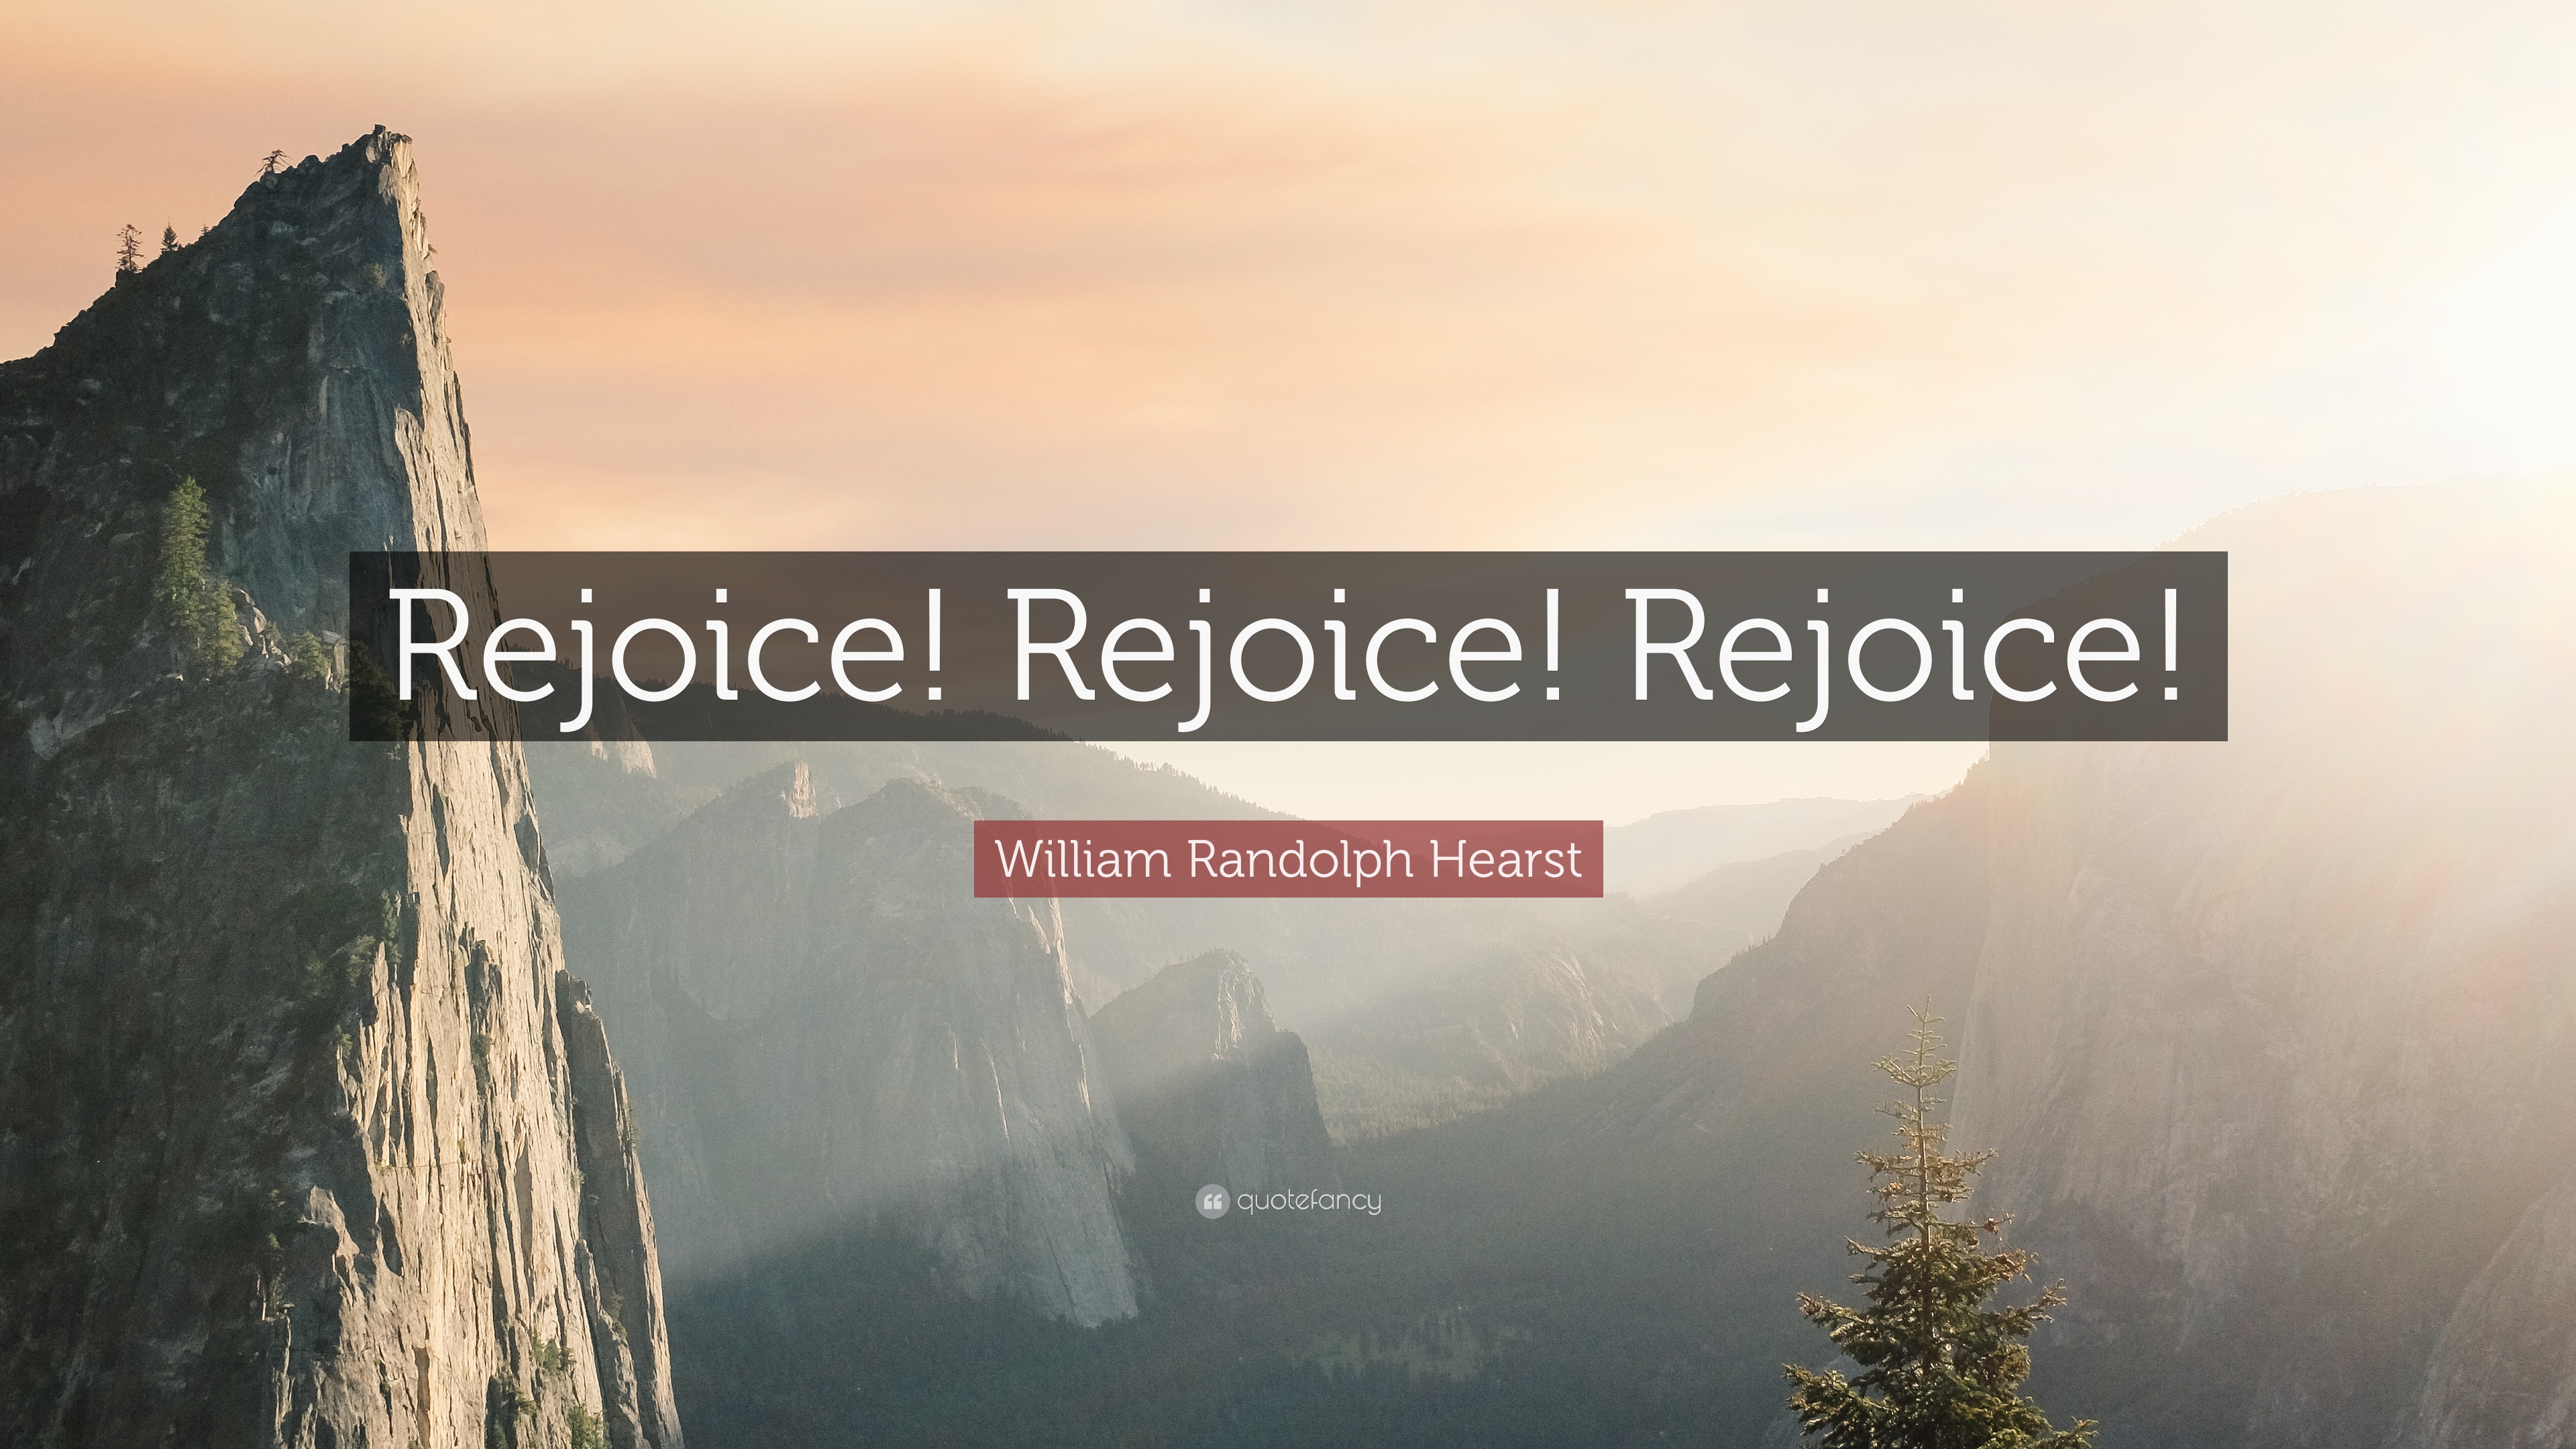 William Randolph Hearst Quote: “Rejoice! Rejoice! Rejoice!”